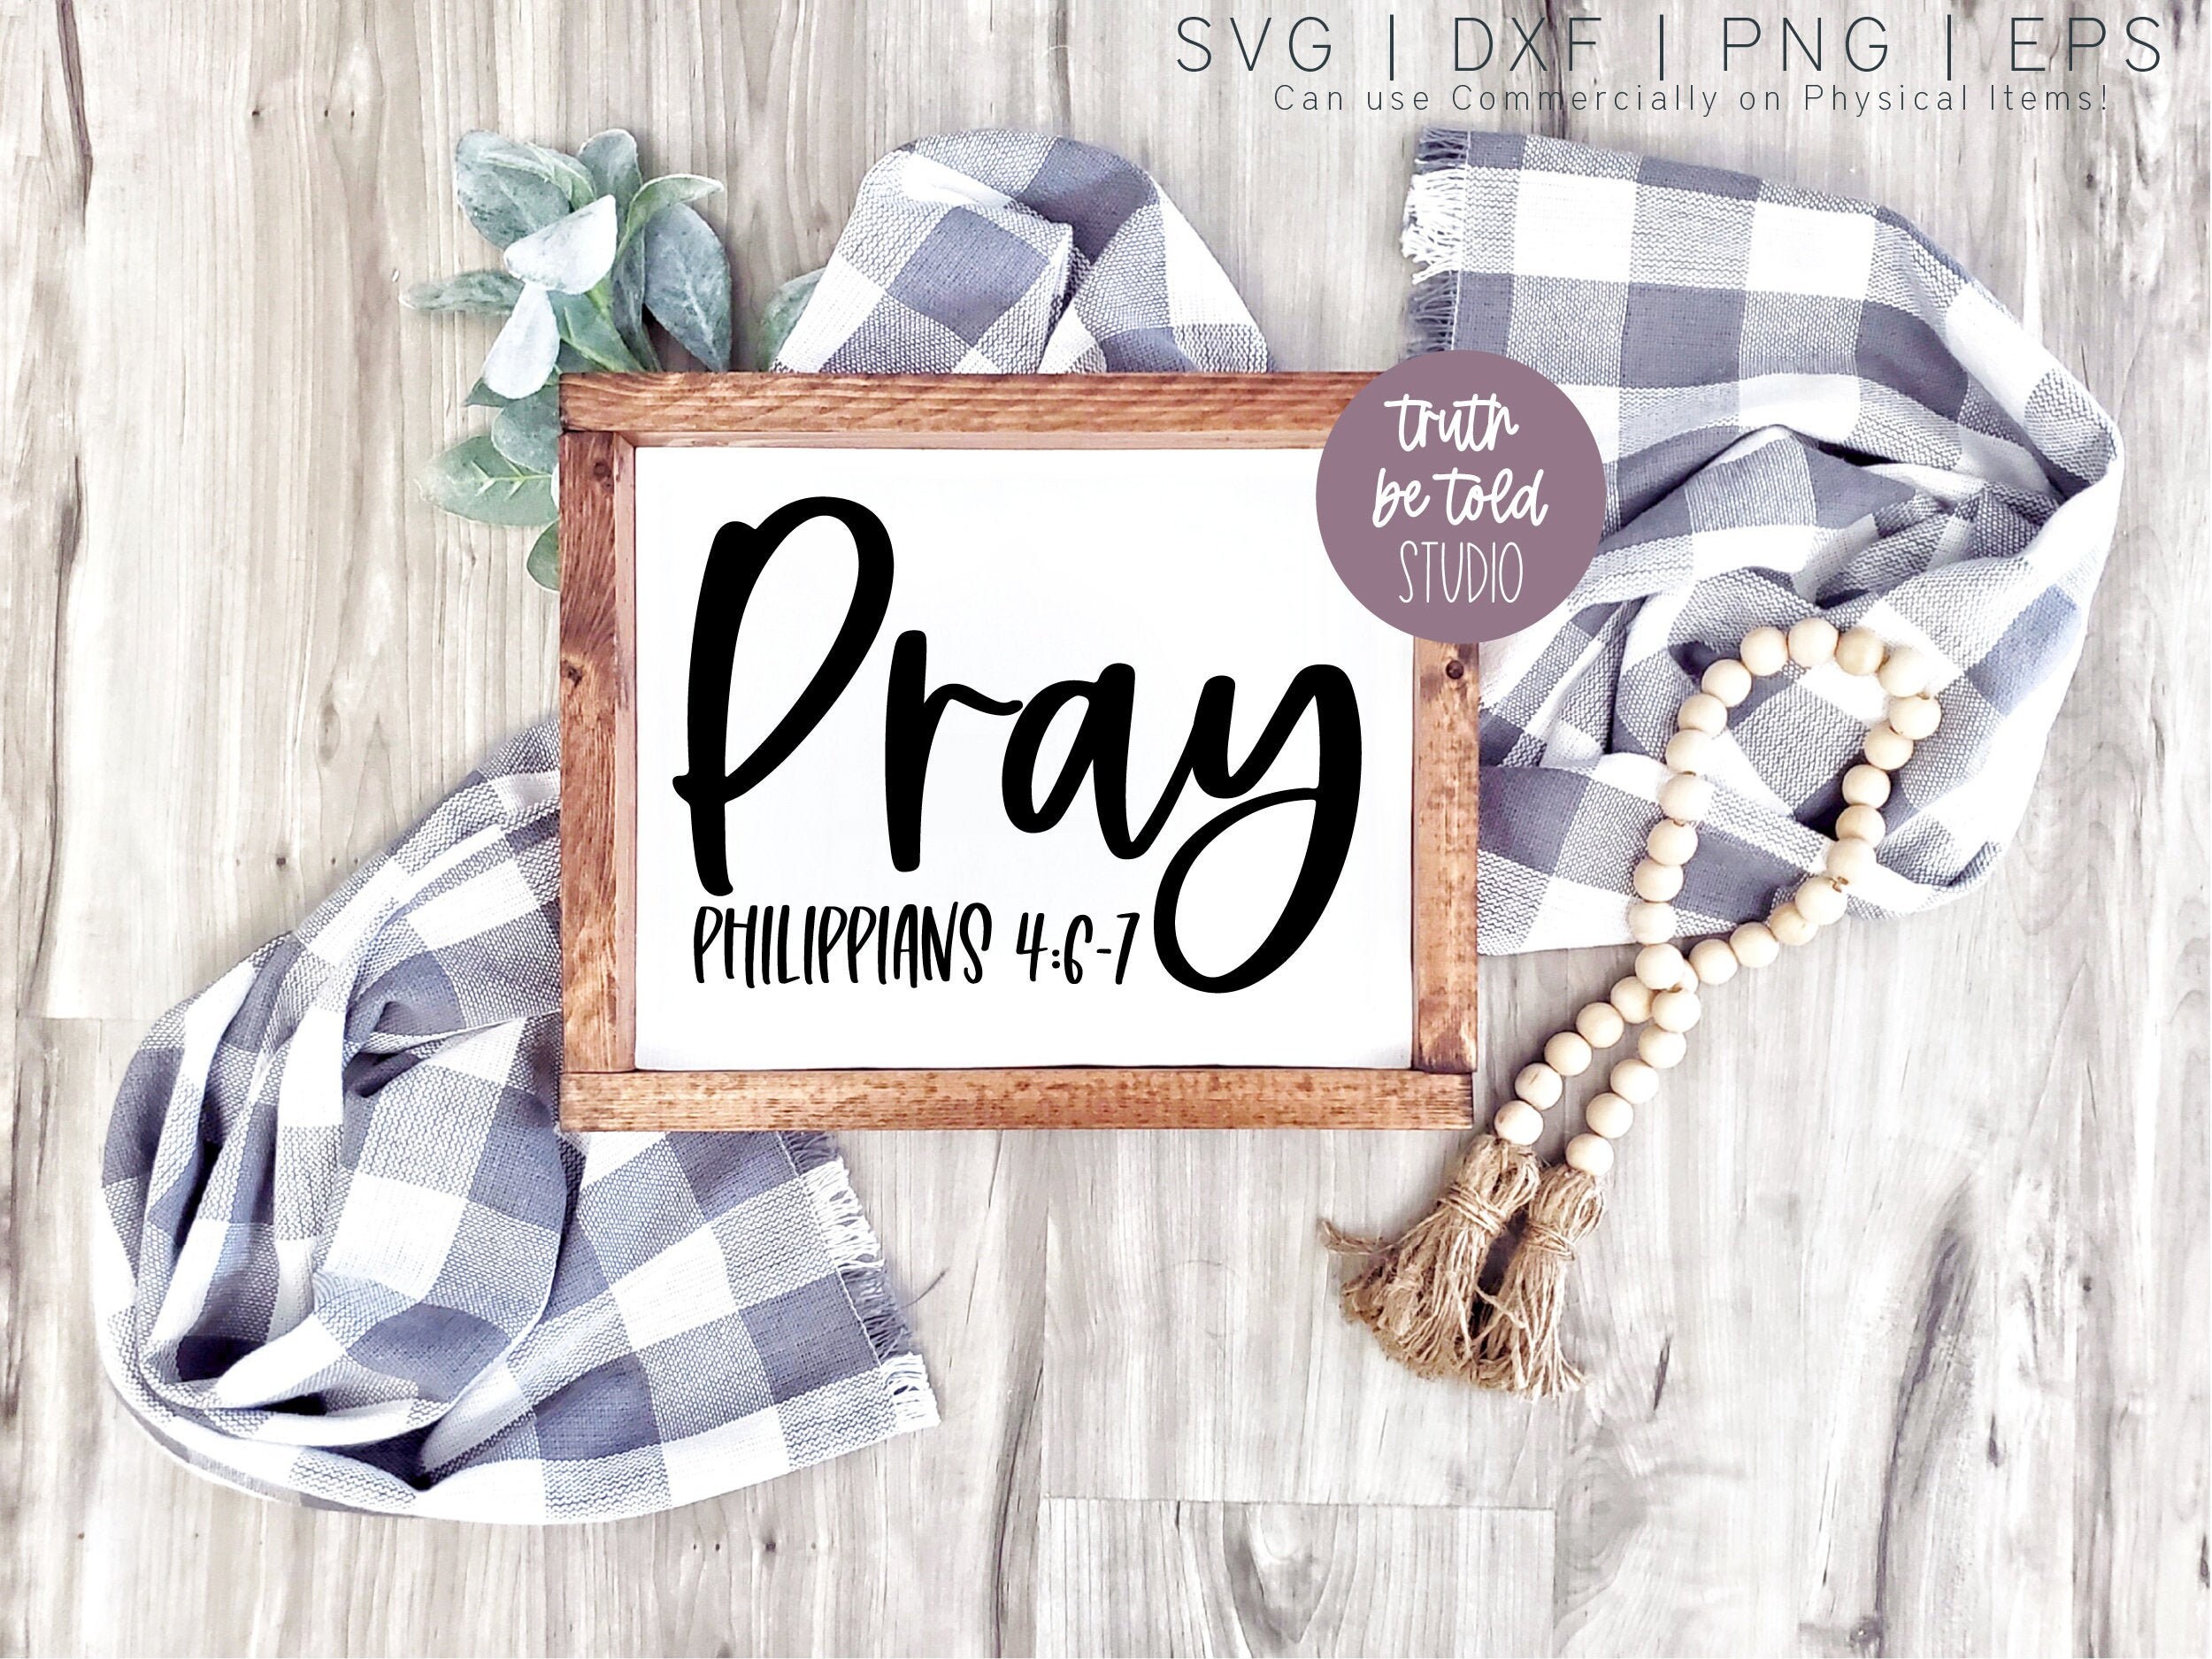 Cricut Joy Vinyl Craft For Beginners + Prayer SVG 